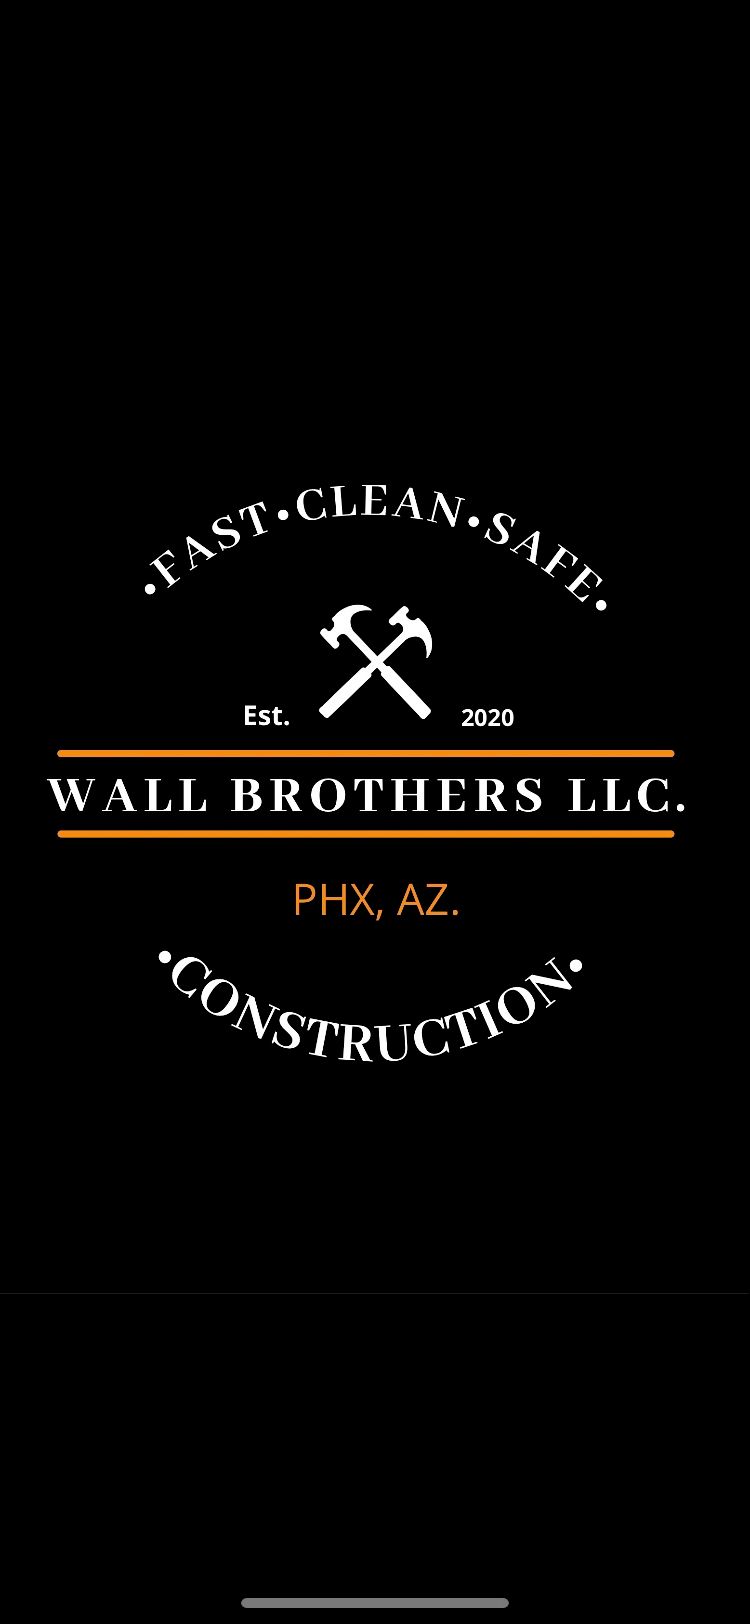 Wall Brothers LLC